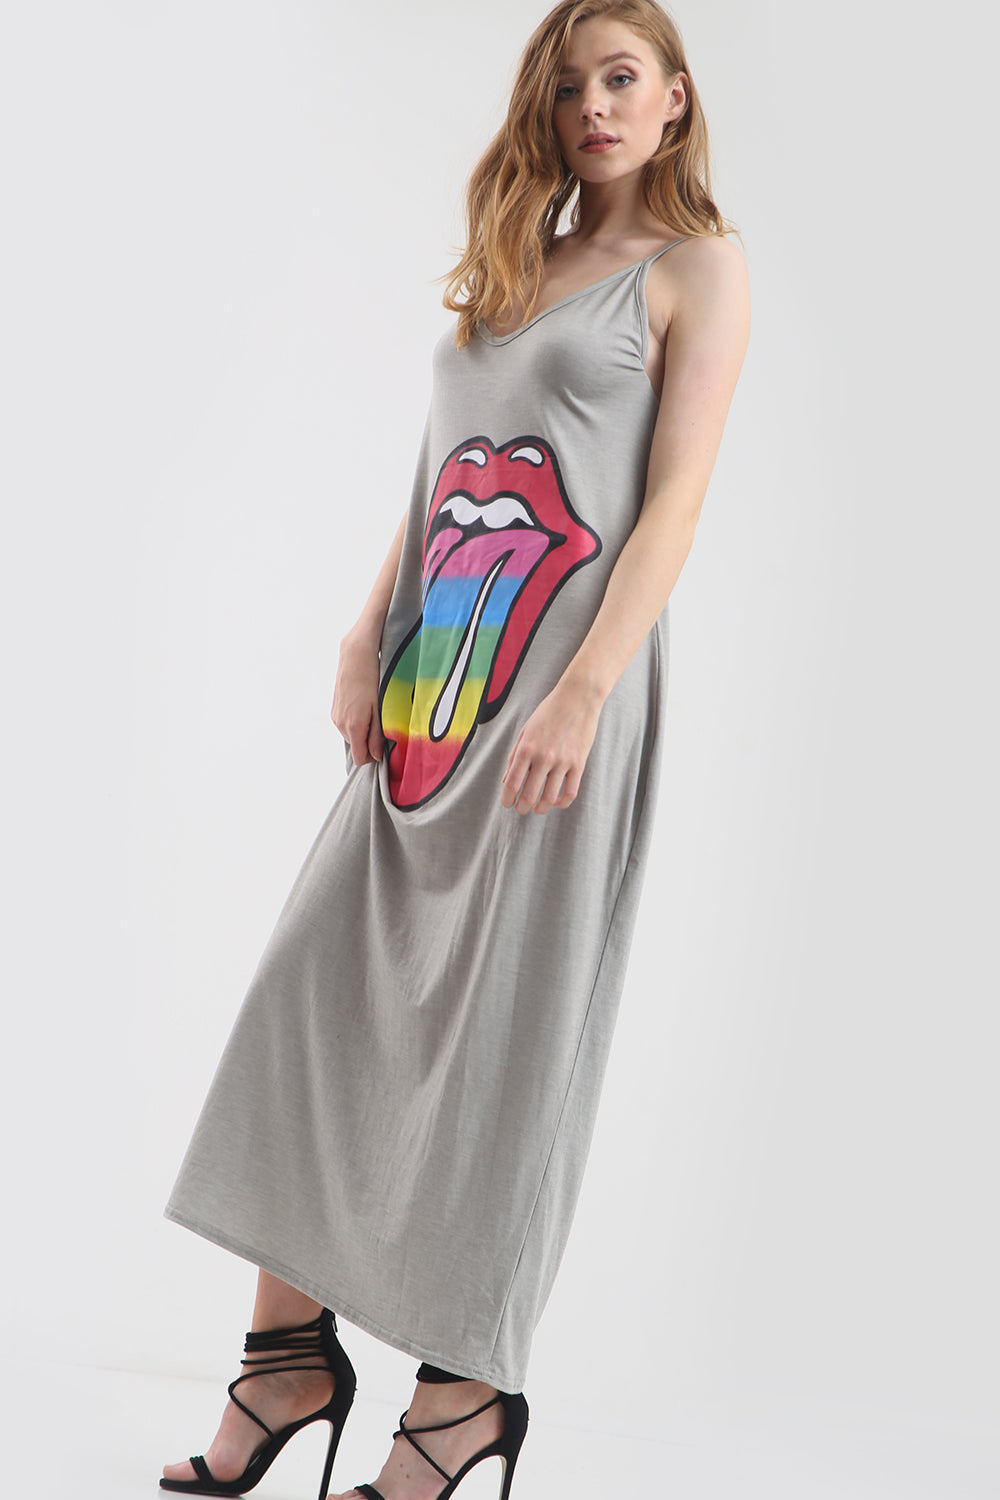 Strappy Grey Rainbow Graphic Print Maxi Dress - bejealous-com